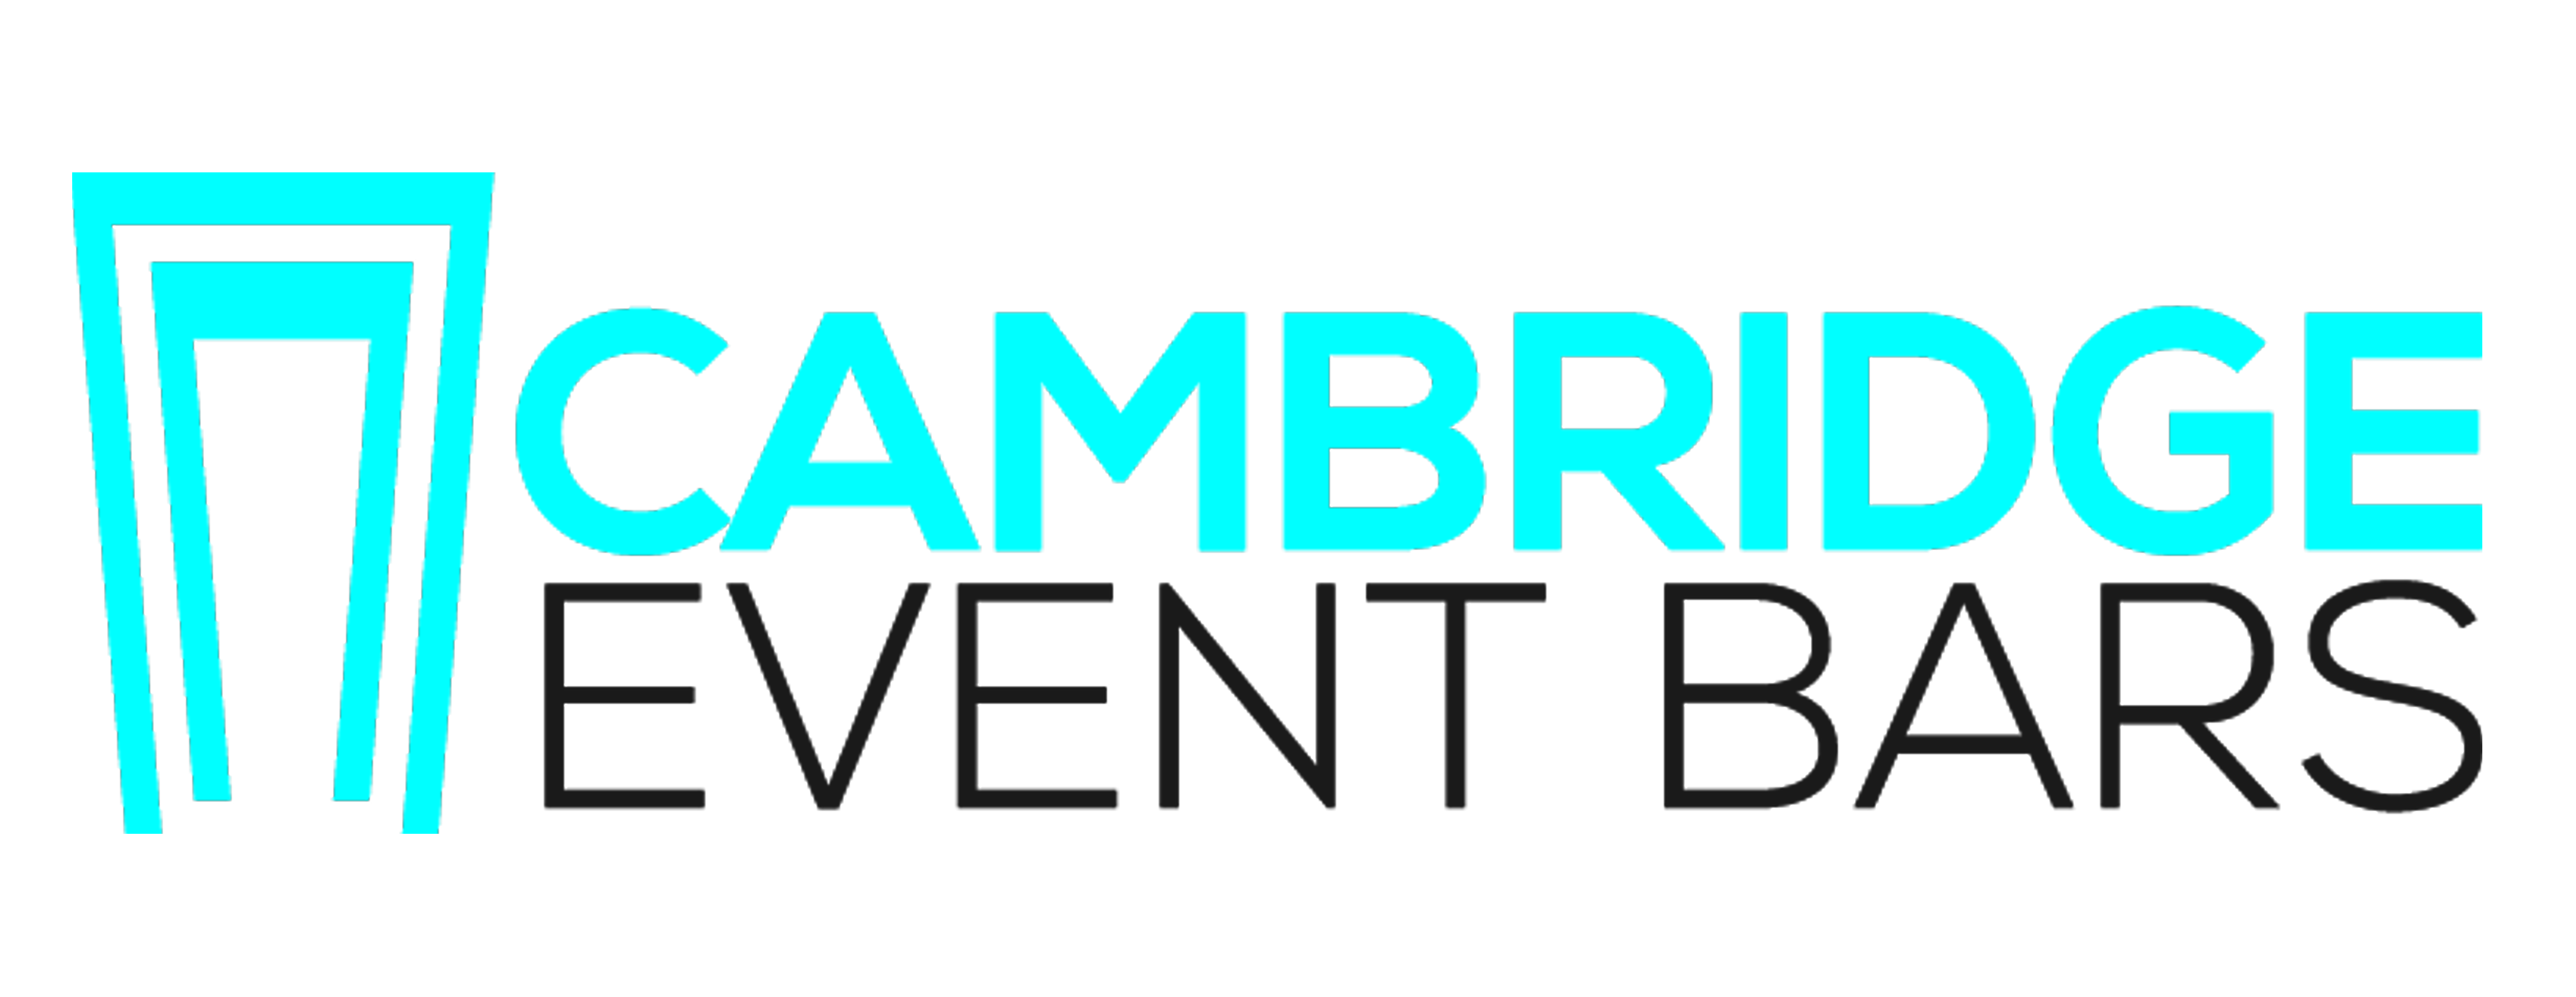 Cambridge Event Bars Logo